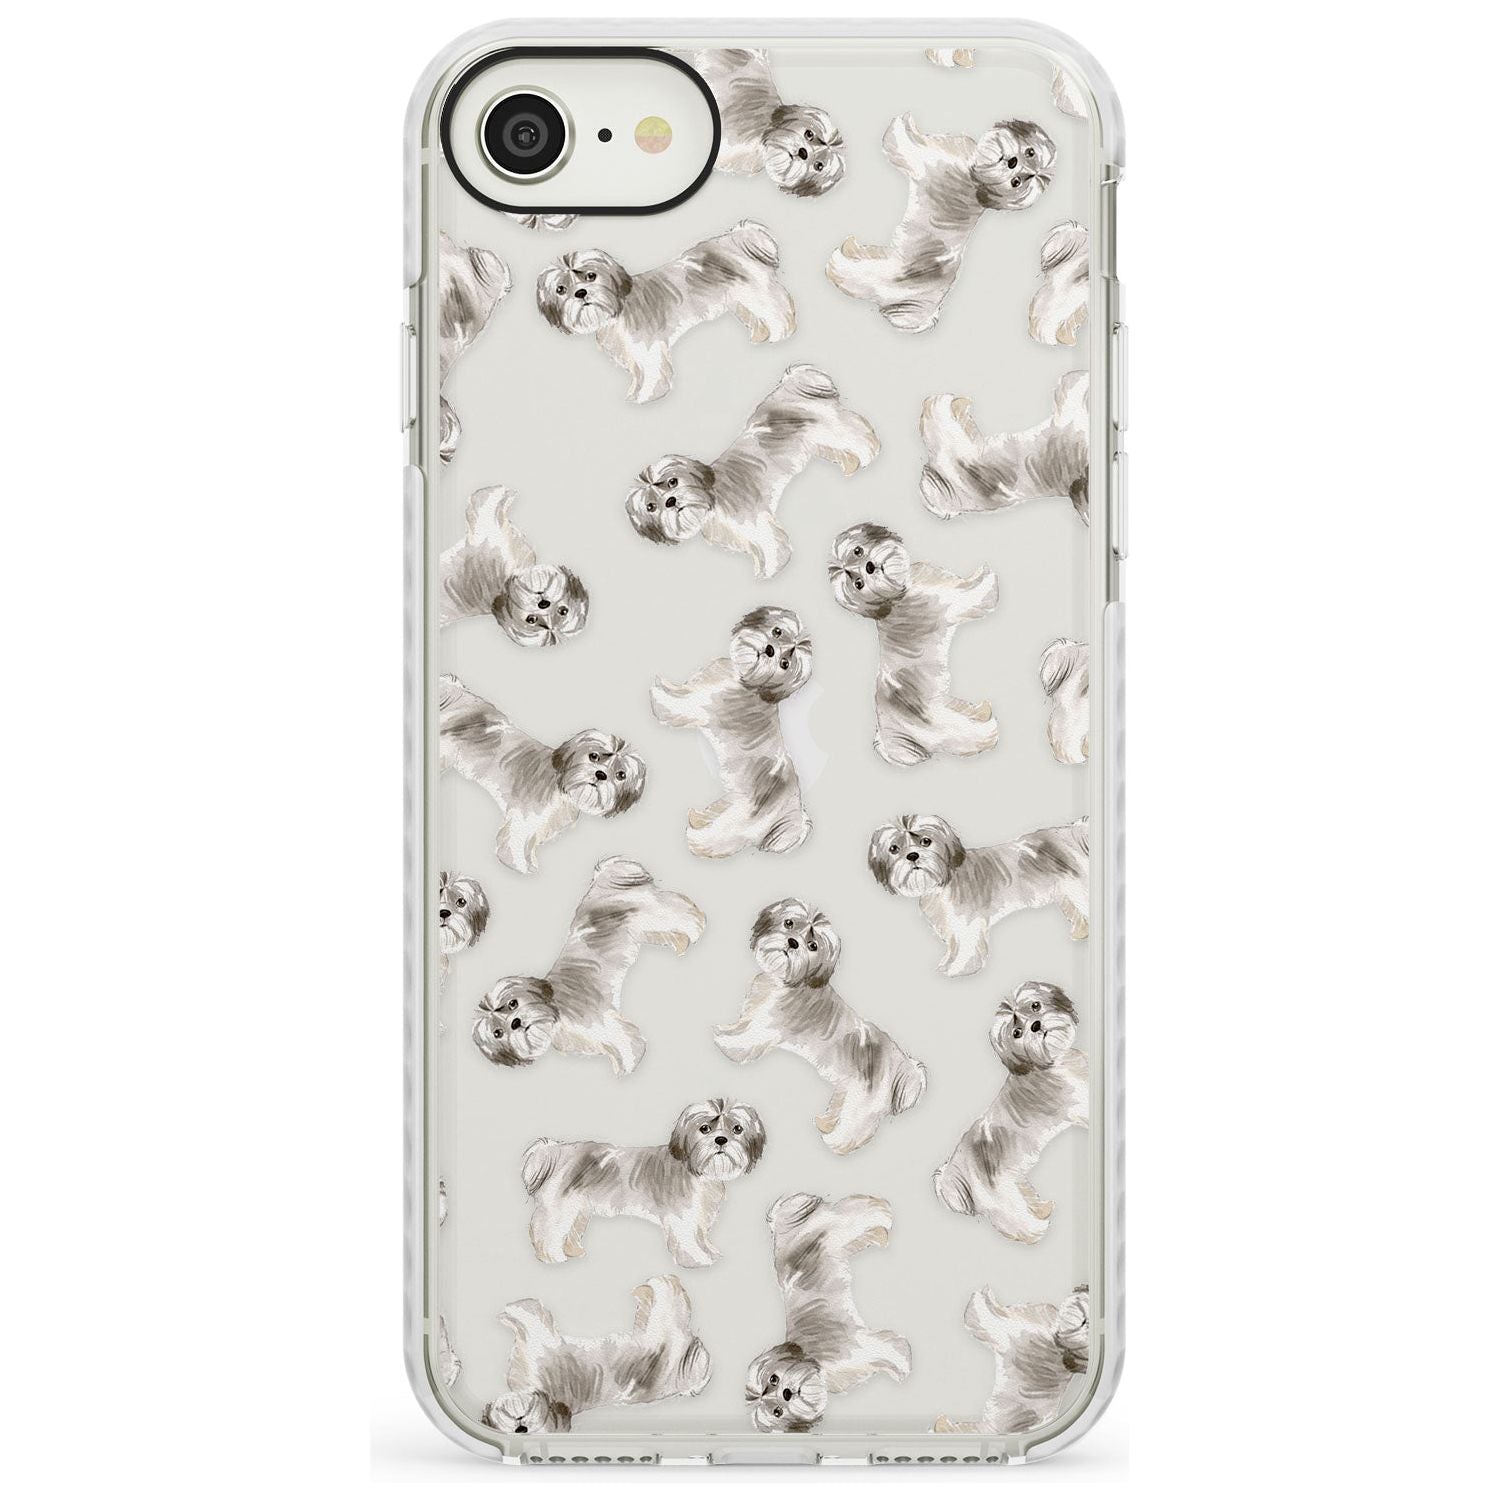 Shih tzu (Short Hair) Watercolour Dog Pattern Impact Phone Case for iPhone SE 8 7 Plus